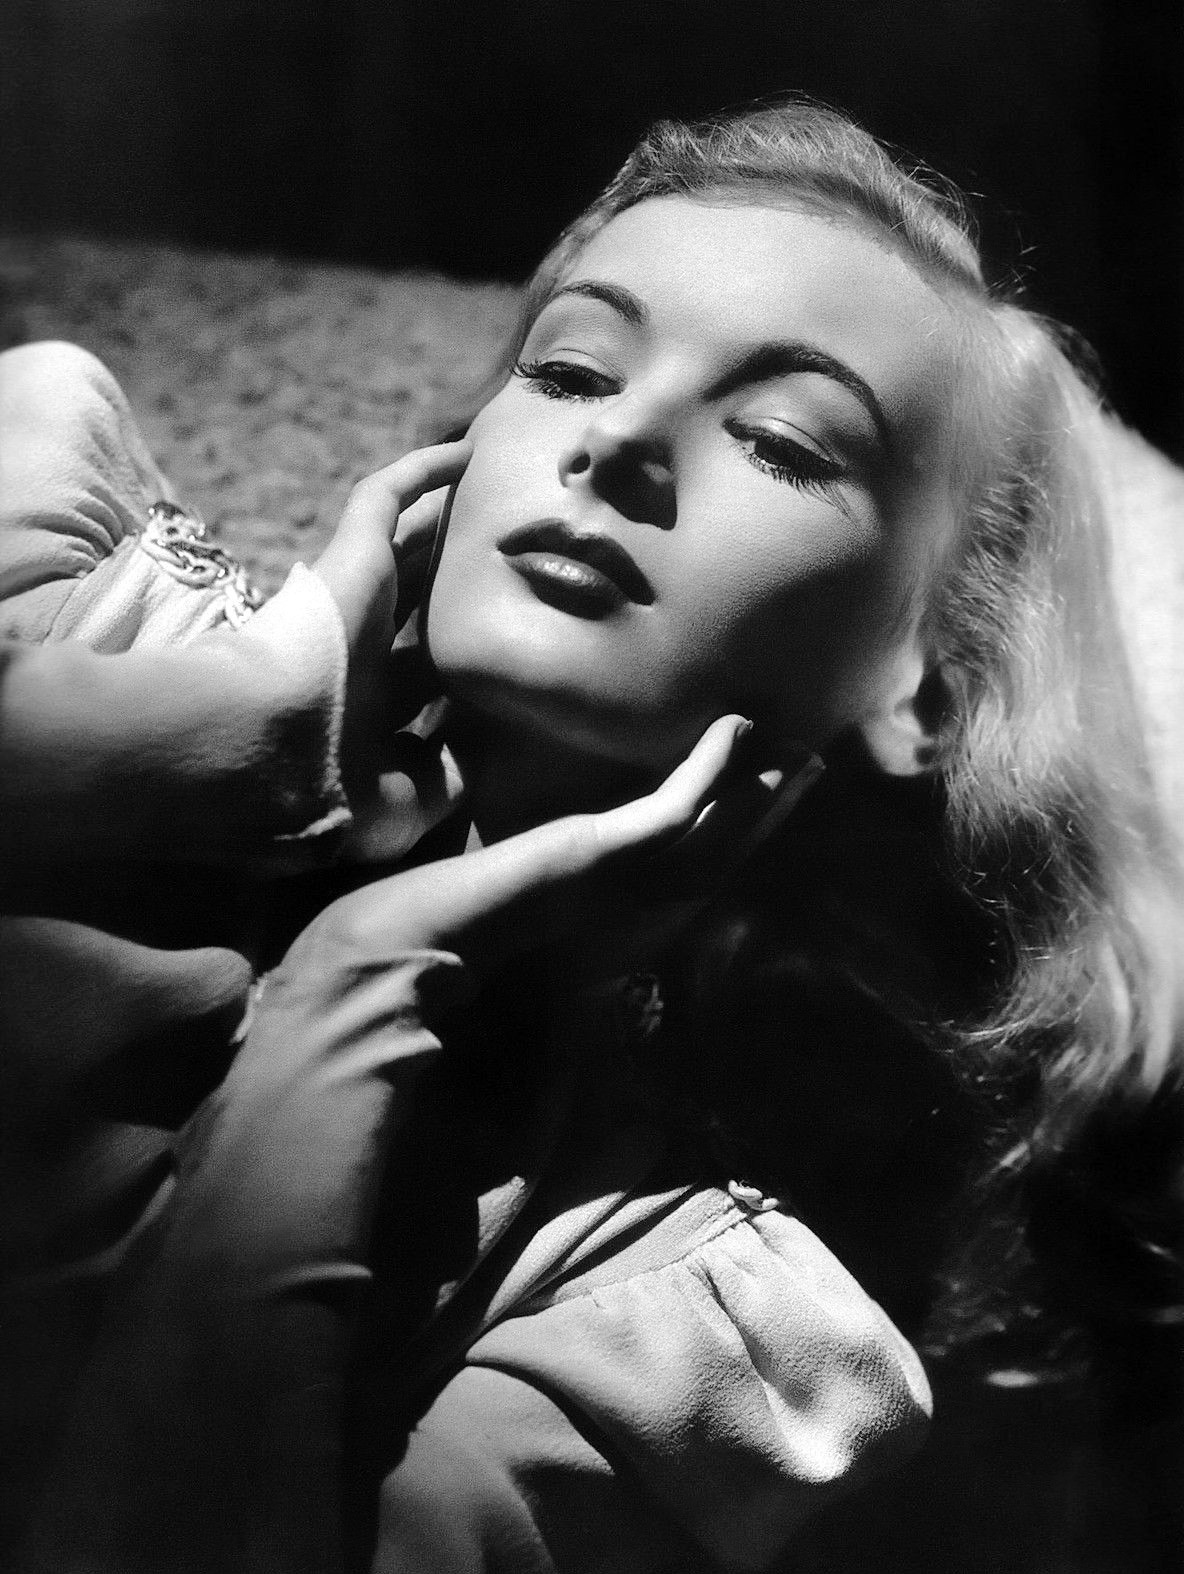 ritamarlowe:
Veronica Lake in the 1940s.
